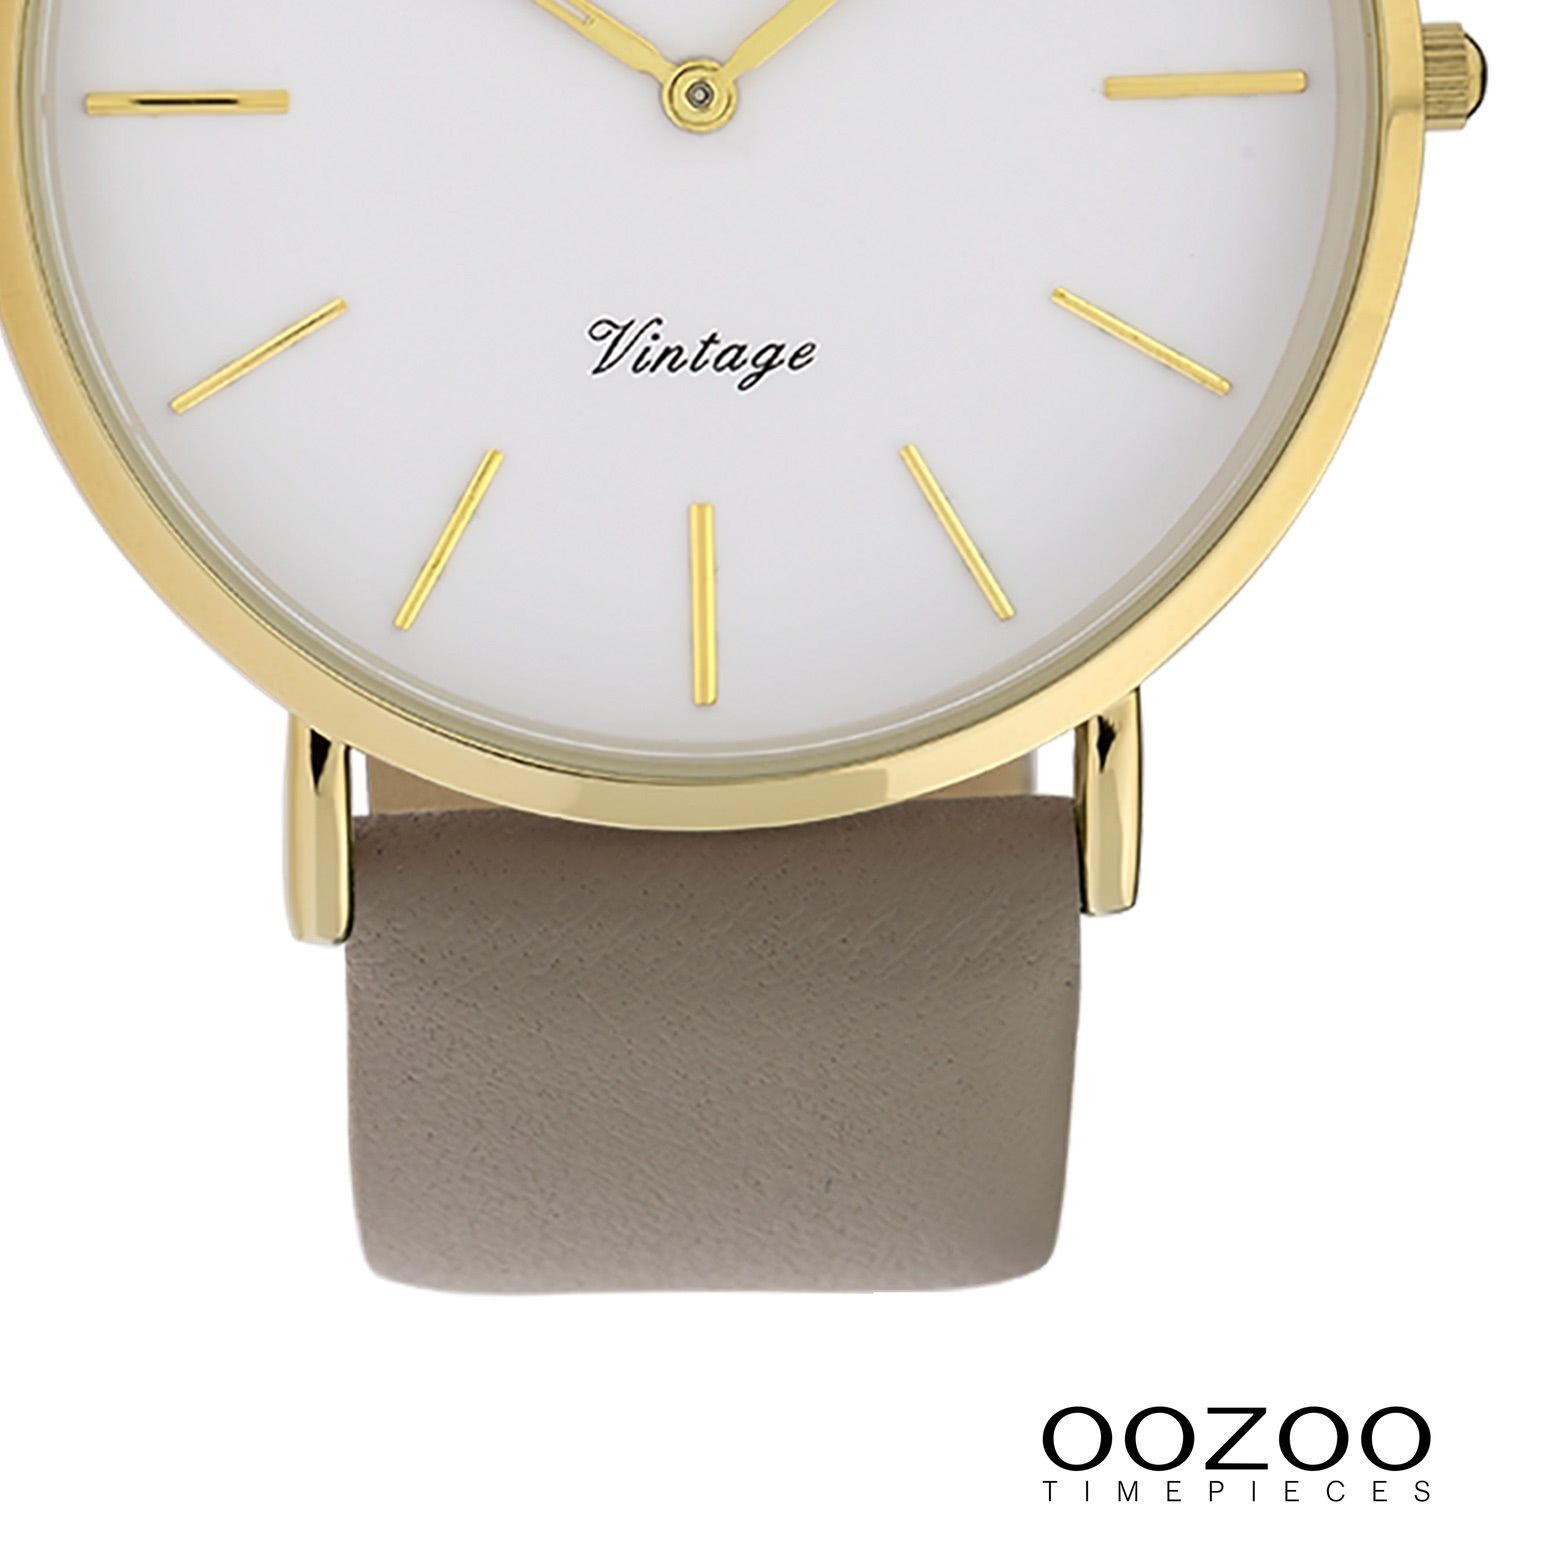 OOZOO Quarzuhr Oozoo rund, Damenuhr (ca. Slim Leder, Ultra Fashion-Style groß Damen Armbanduhr 40mm) Lederarmband